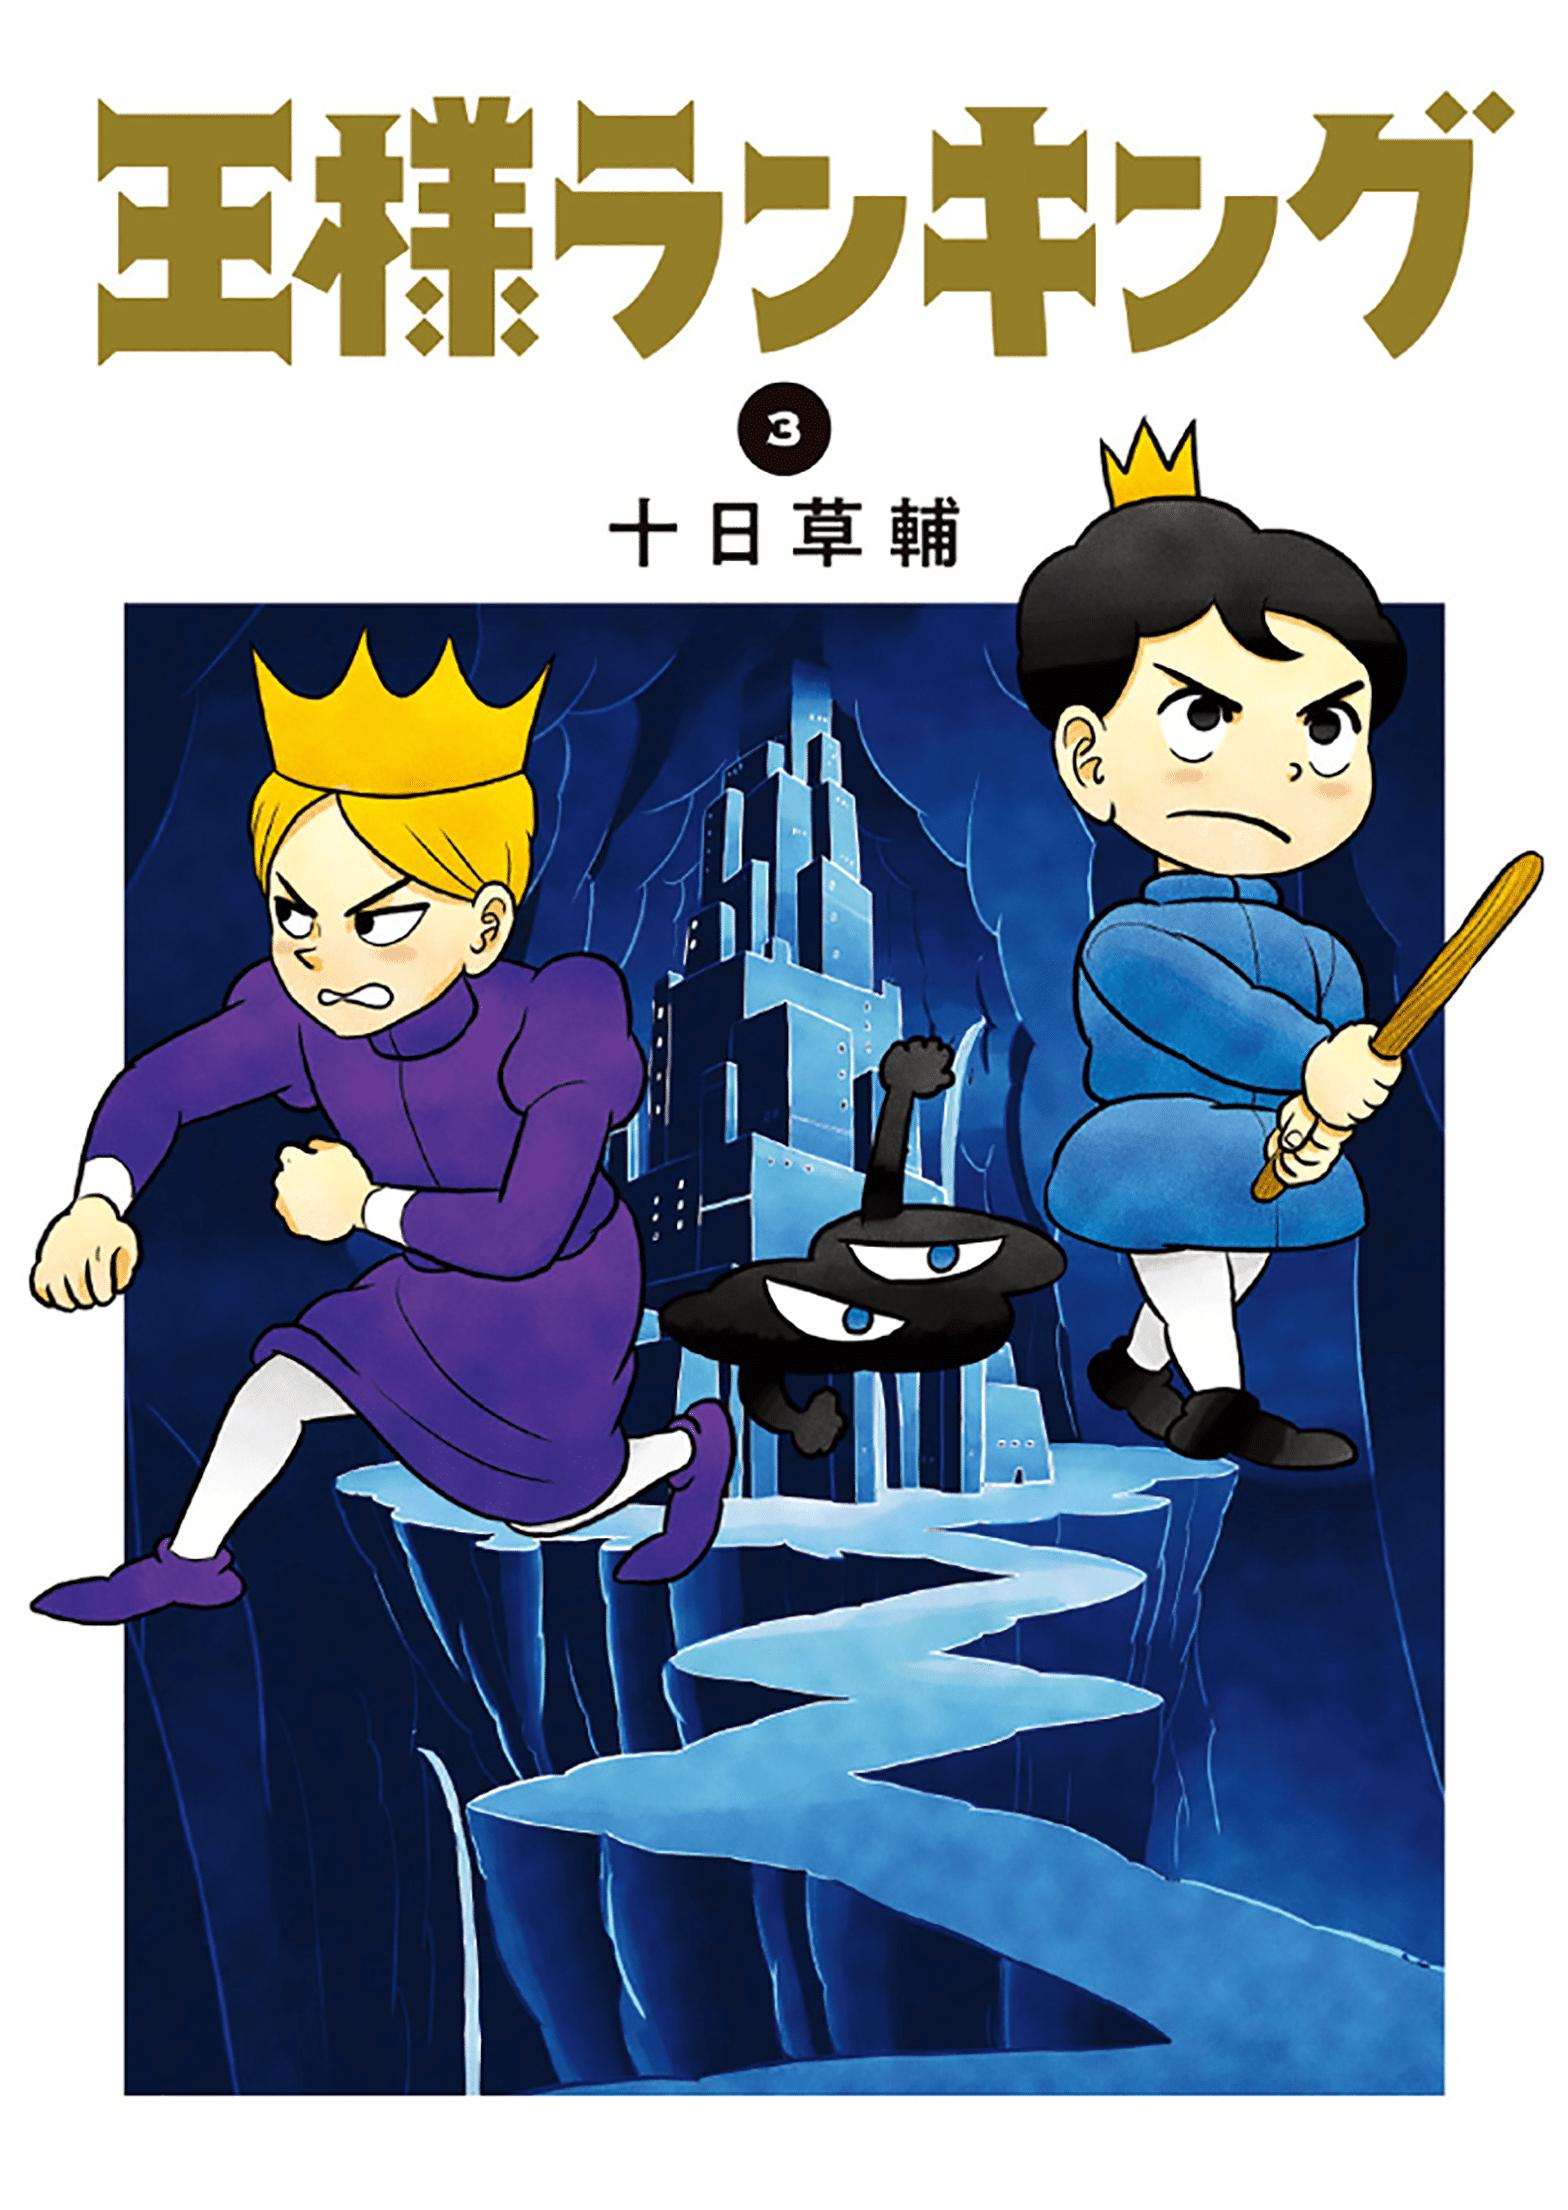 Ranking of Kings, Chapter 172 - Ranking of Kings Manga Online